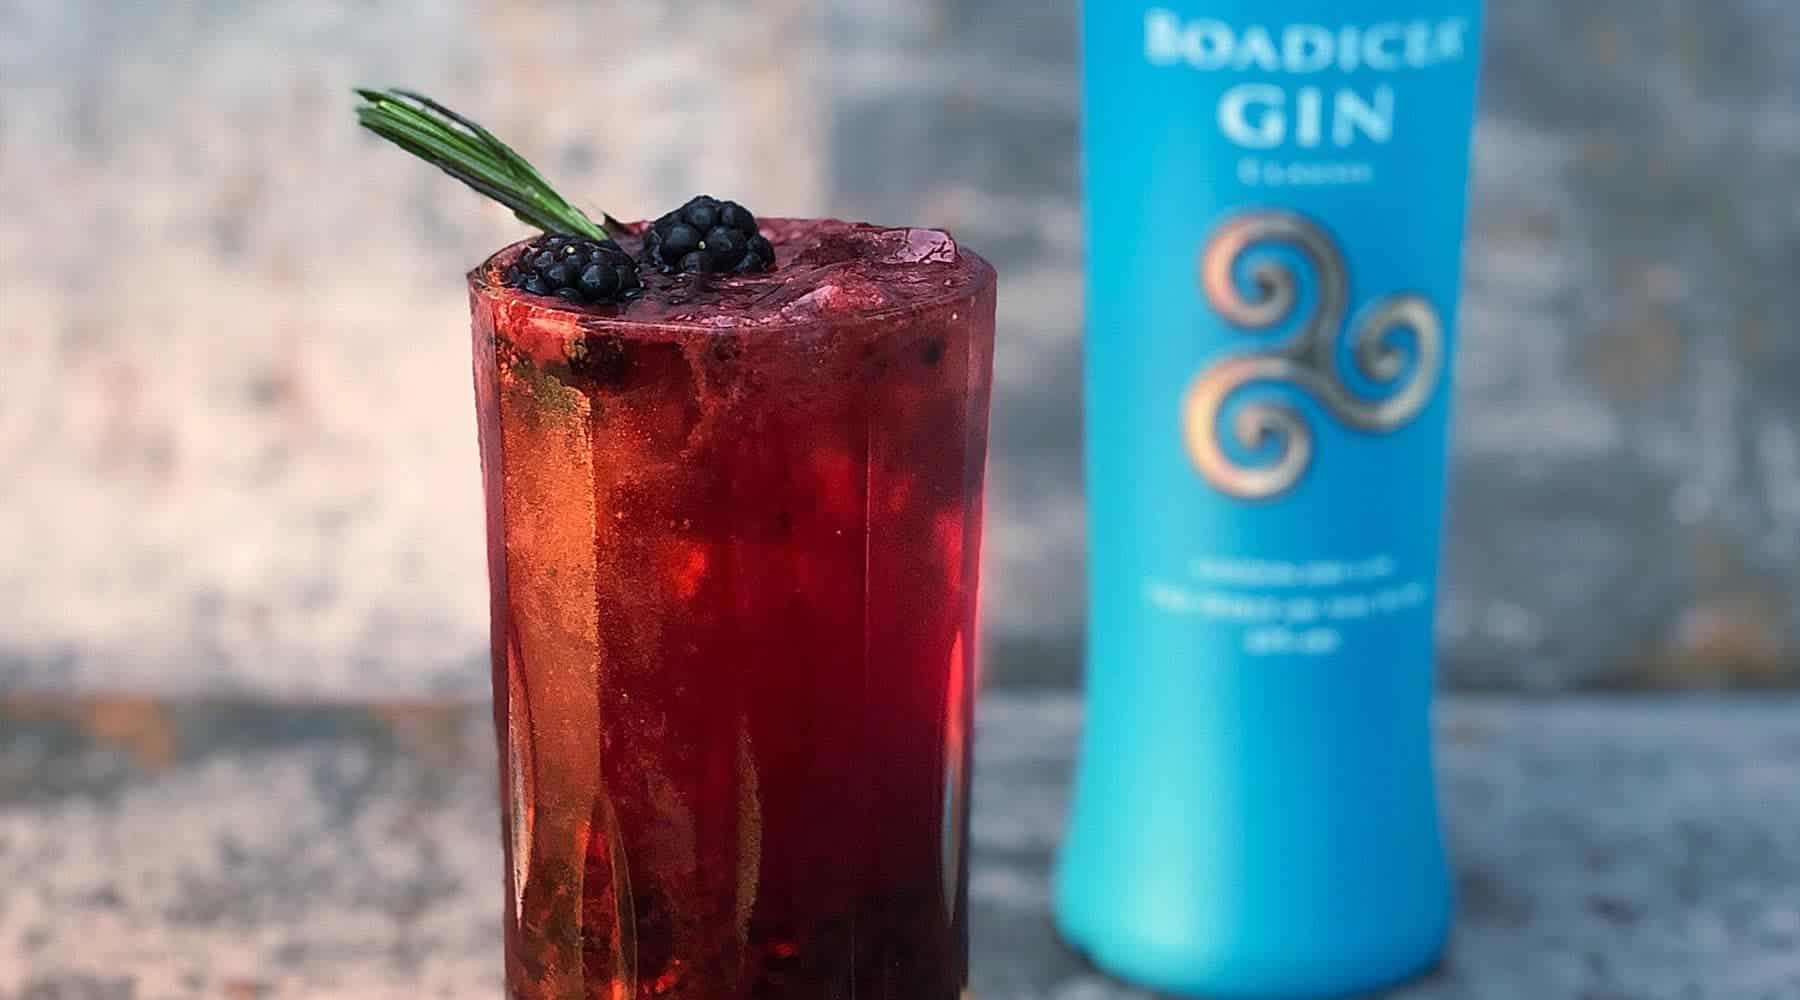 Boadicea® Gin - Classic - Blackberry Sling